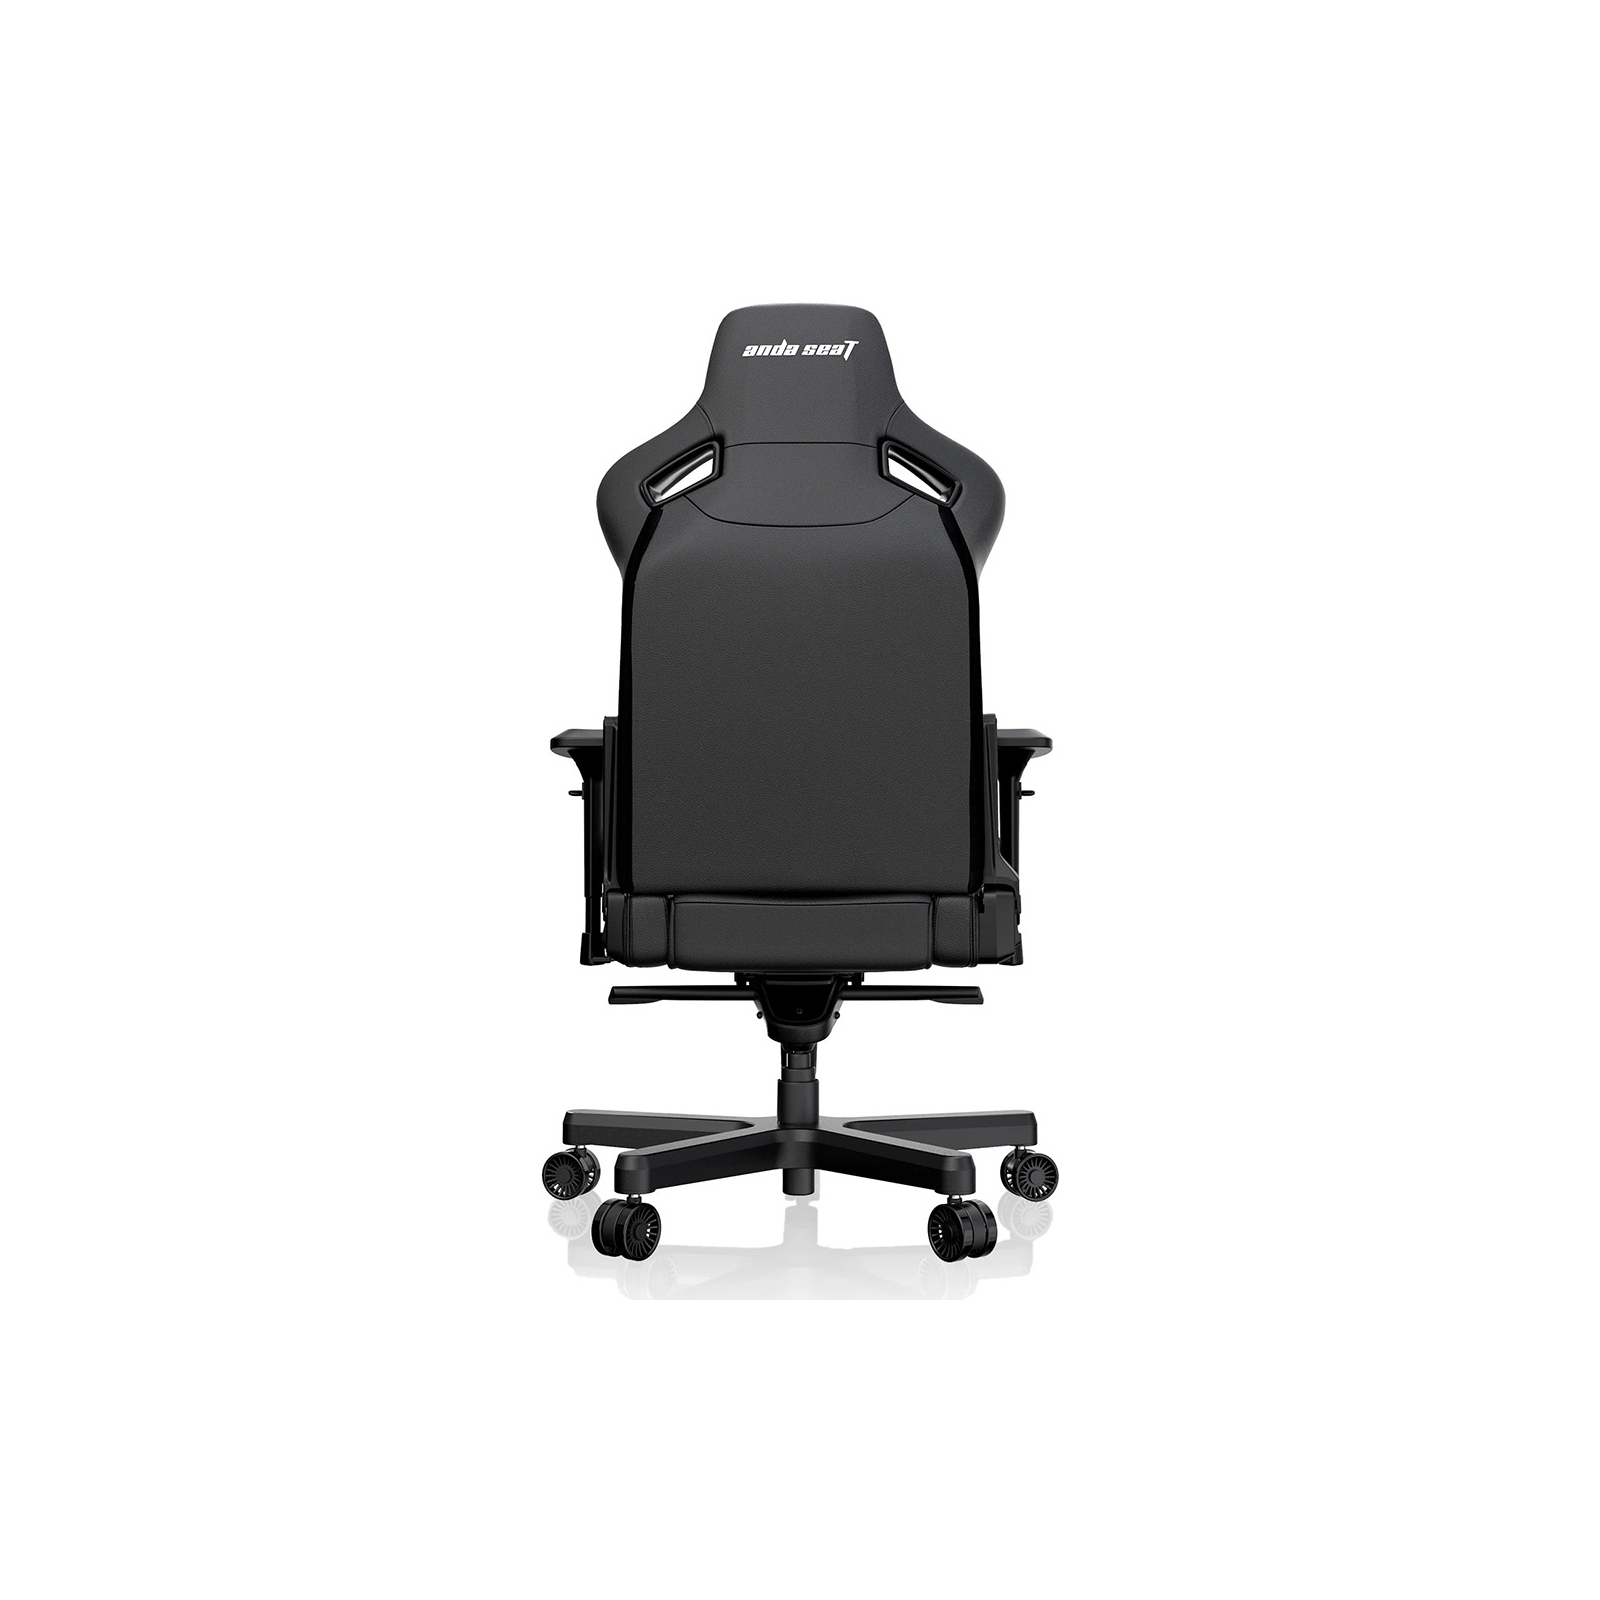 Кресло игровое Anda Seat Kaiser 2 Size XL White (AD12XL-07-W-PV-W01) изображение 3